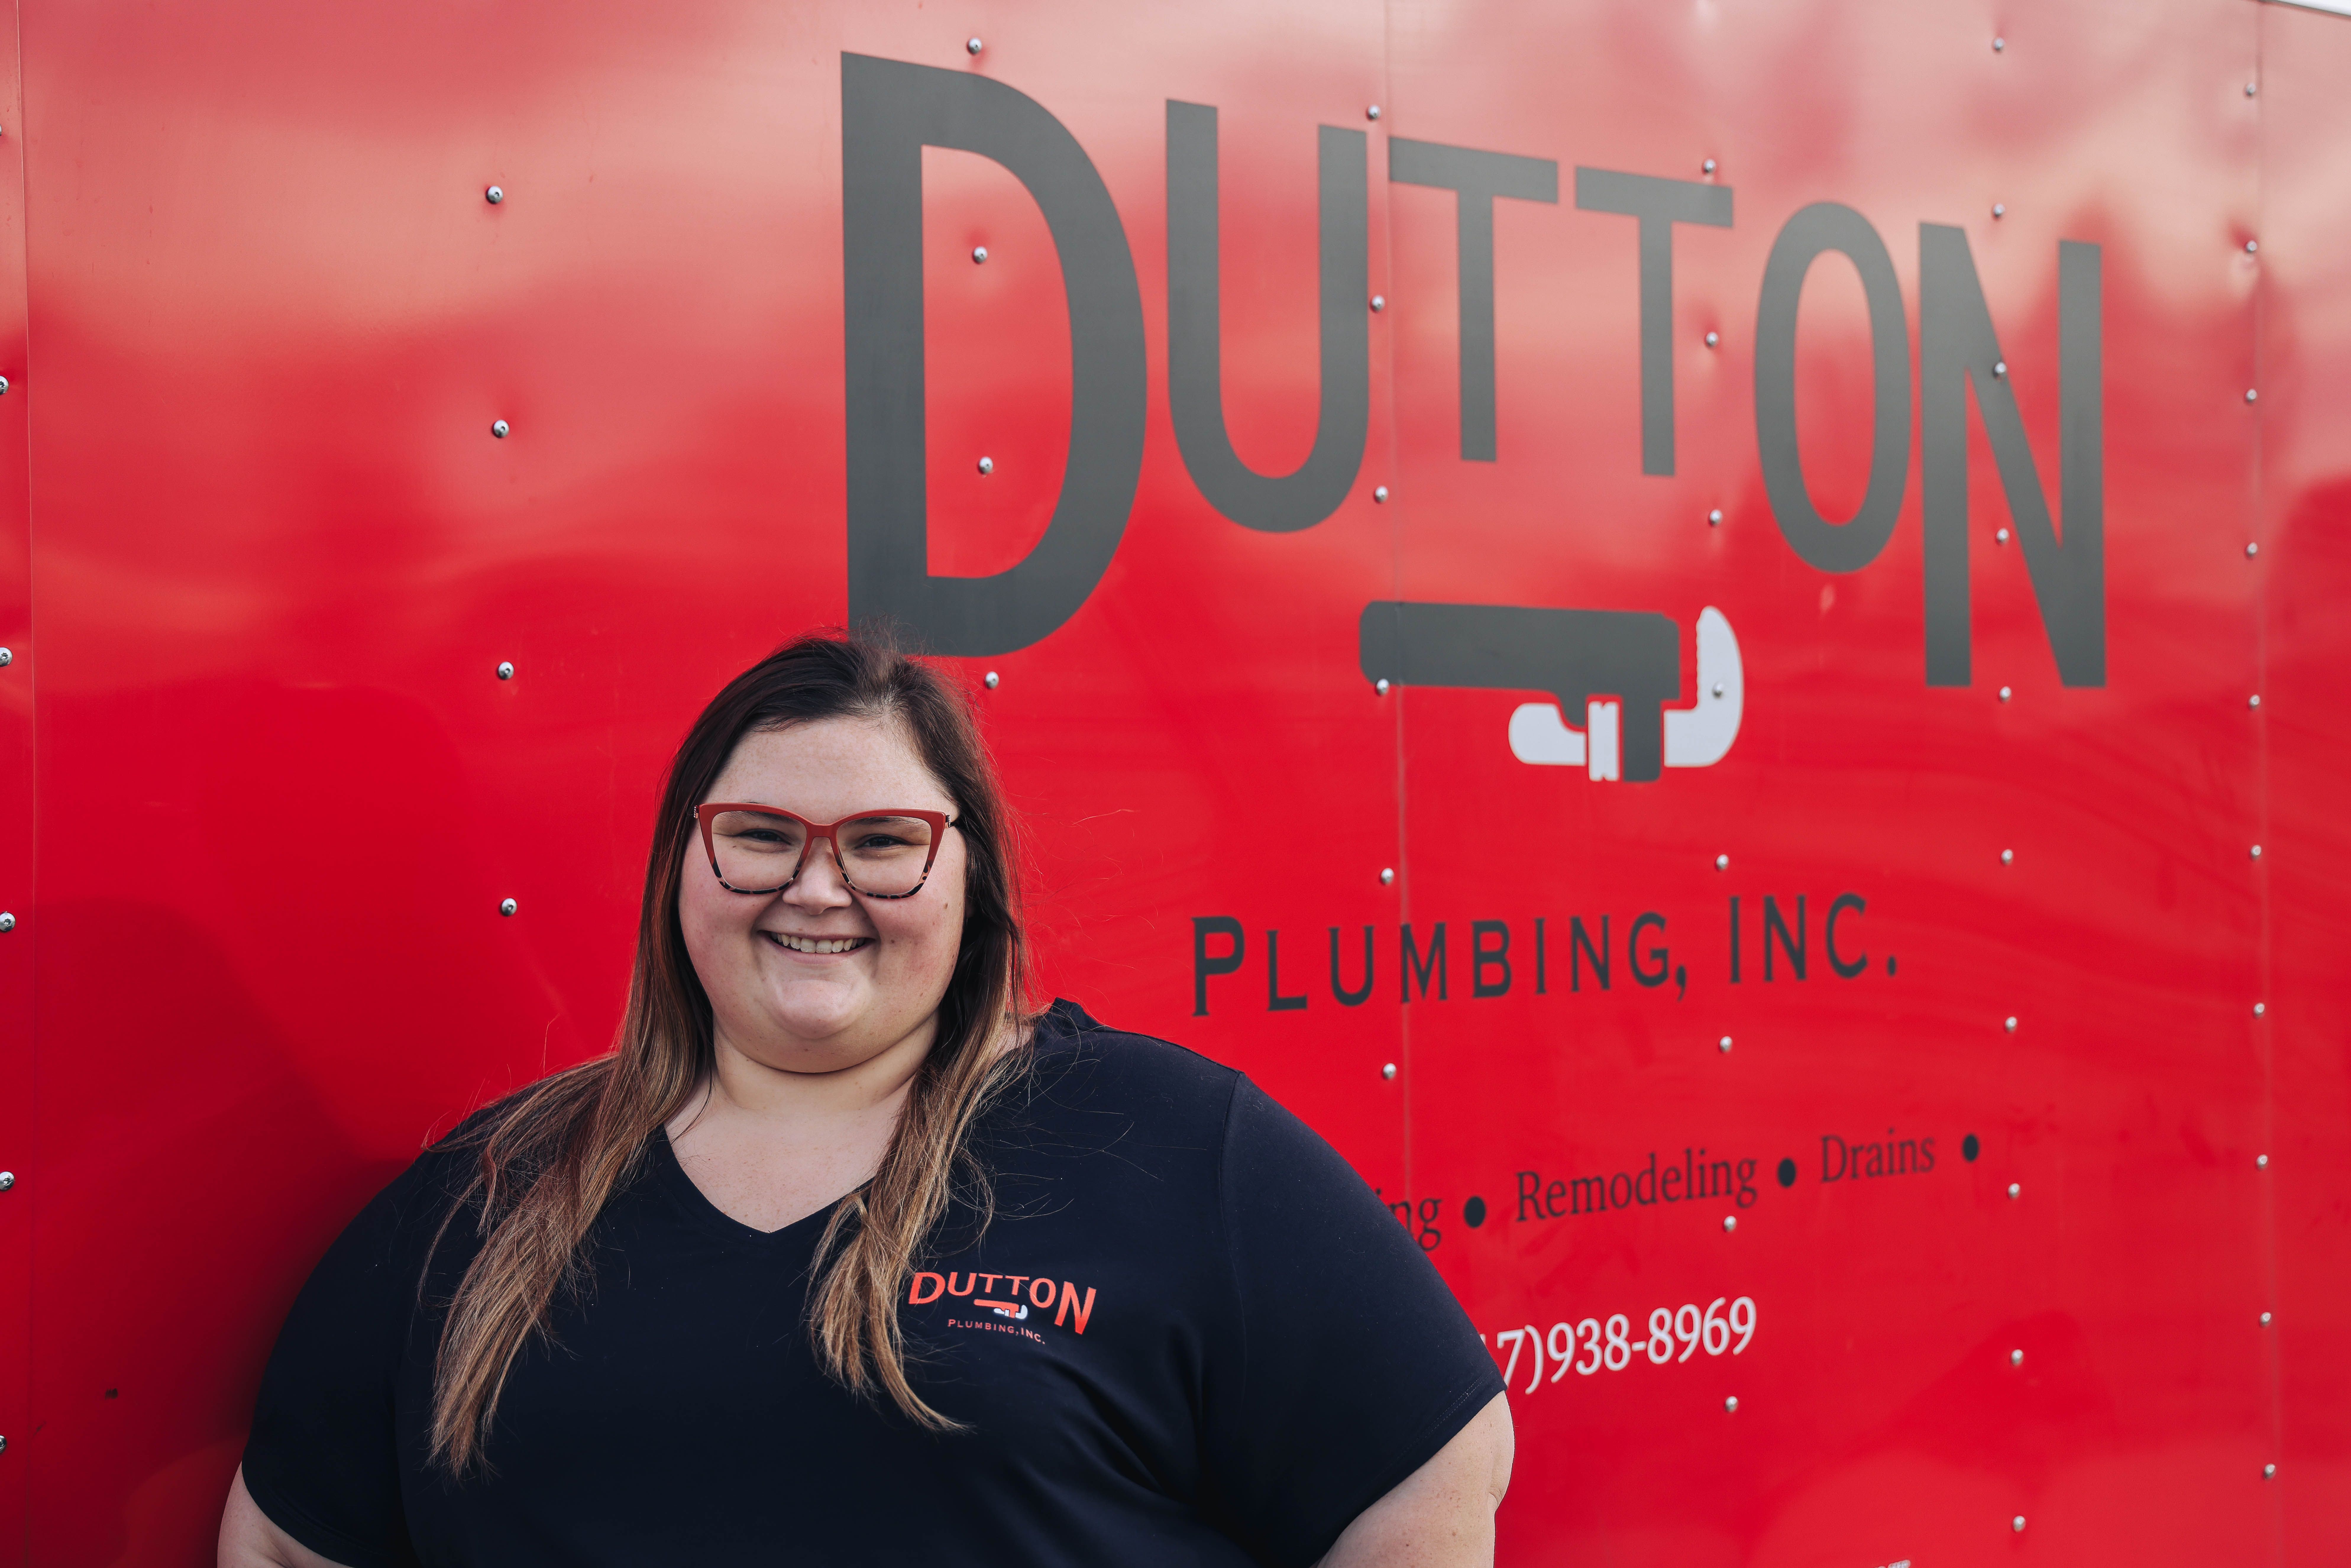 Chelsea Dutton at Dutton Plumbing, Inc. in Whiteland, IN